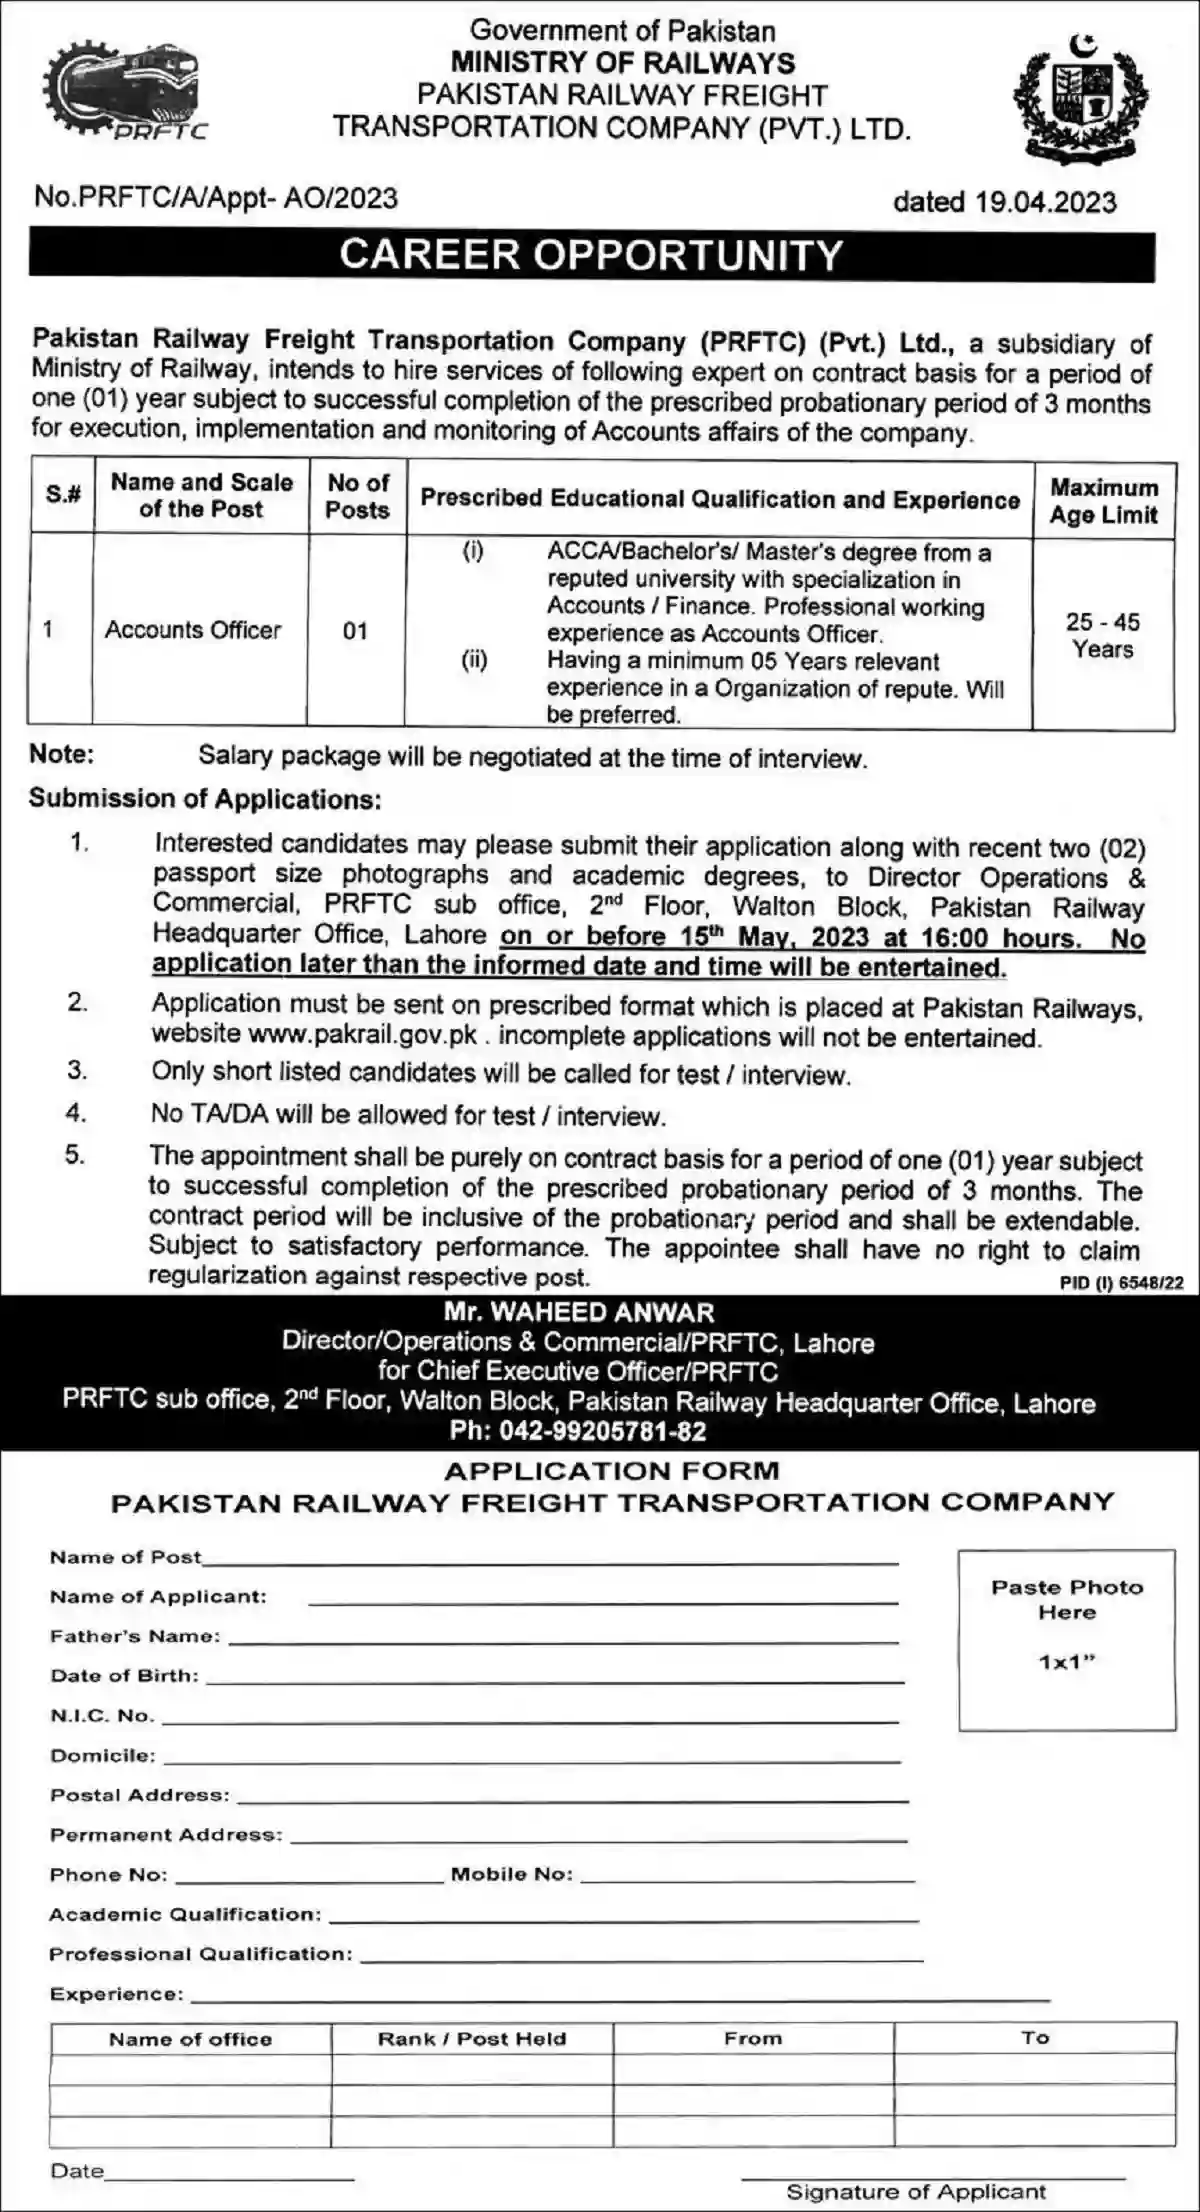 Pakistan Railway Freight Transportation Company PRCTC Jobs 2023: Ministry of Railways